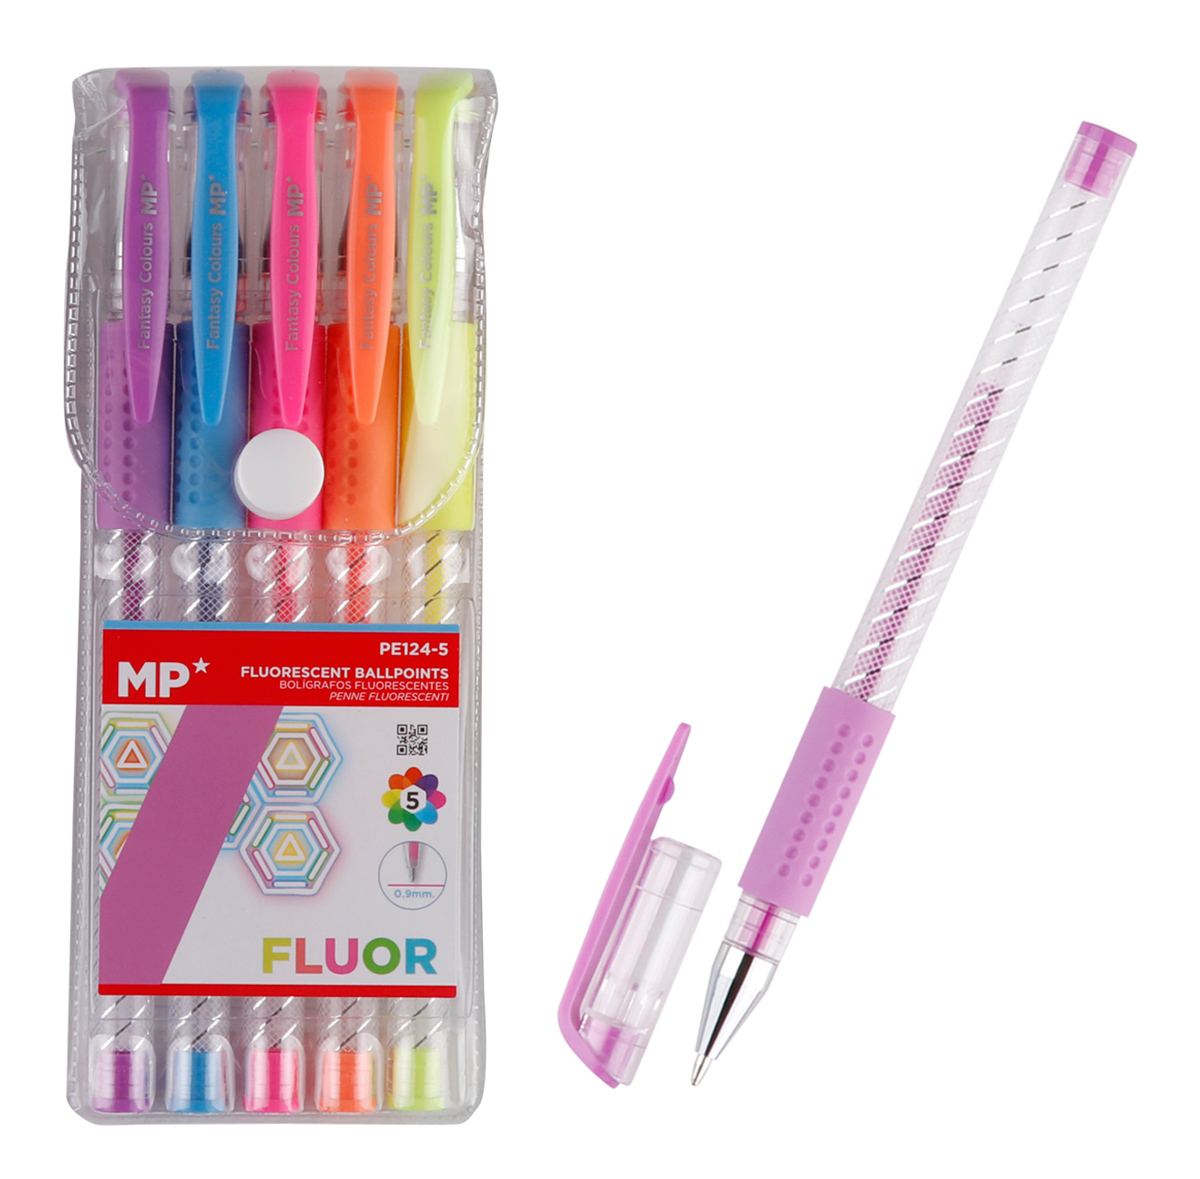 MP σετ στυλό fluorescent ballpoint PE124-5, 0.9mm, πολύχρωμα, 5τμχ - MP 116219